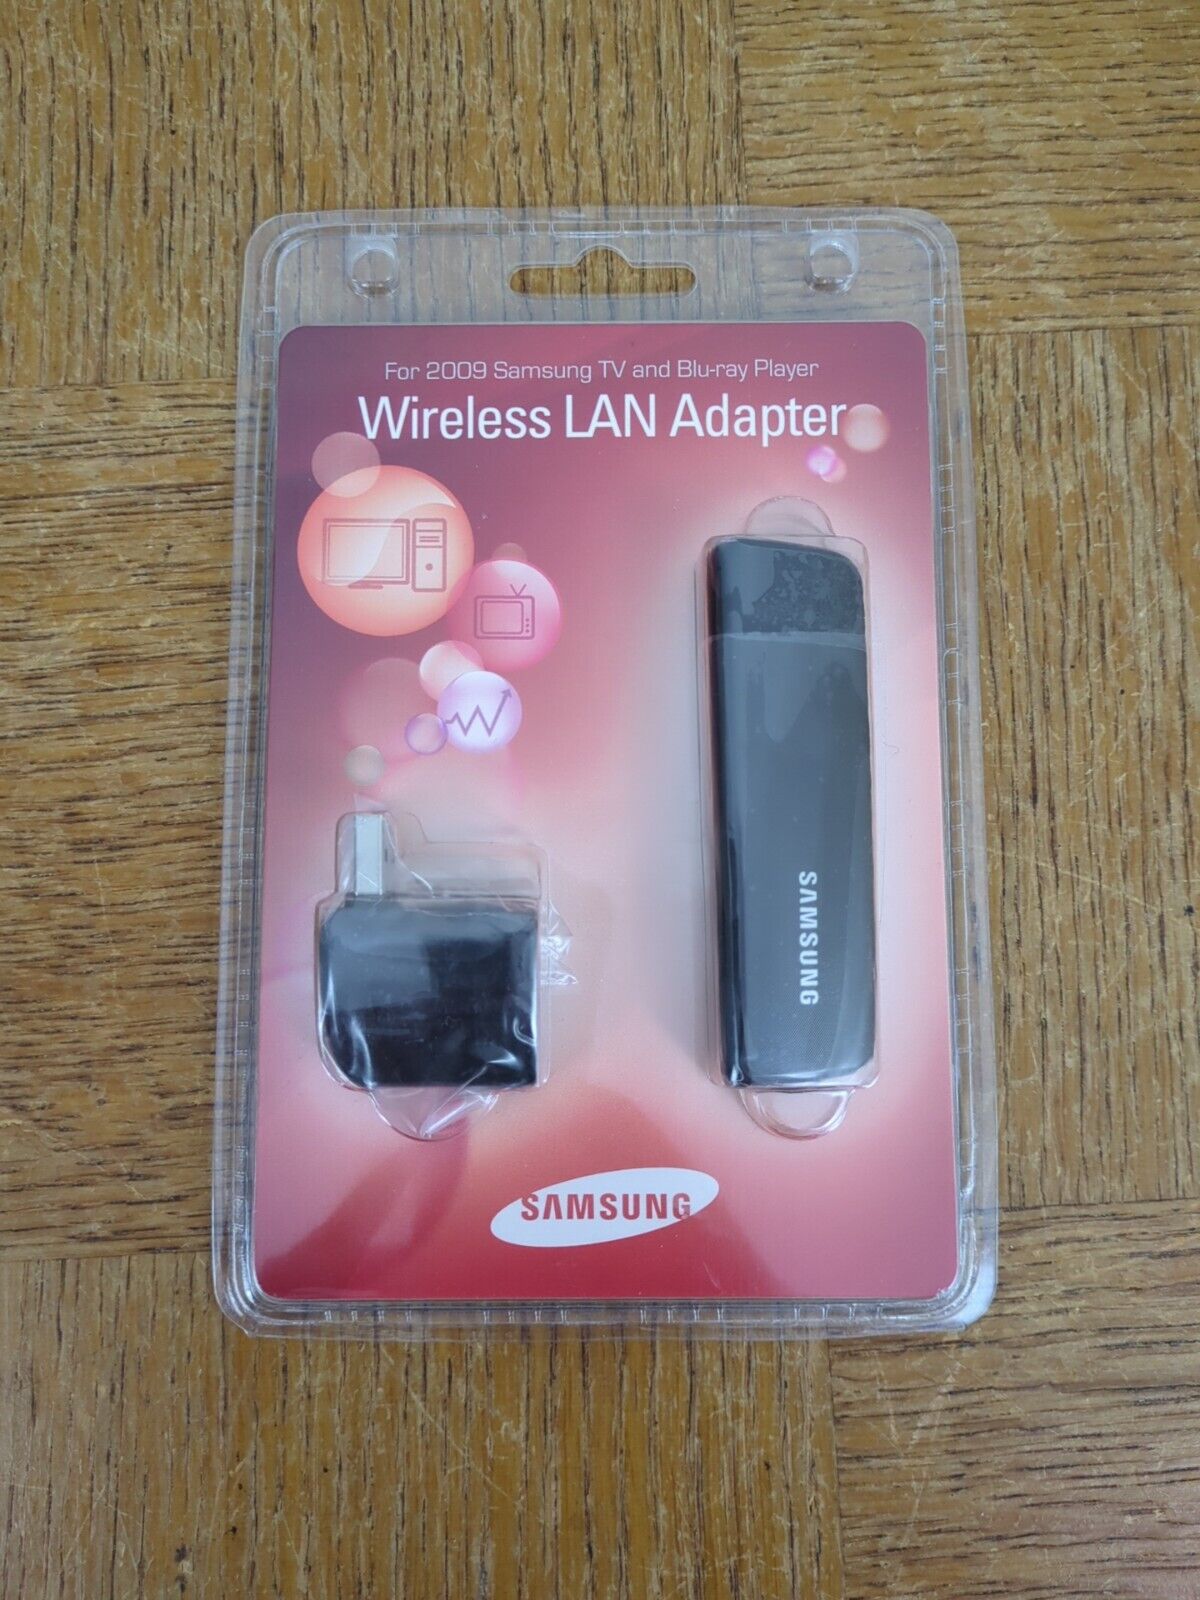 Samsung Link Stick Wireless Wi-Fi LAN Adapter Model WISO9ABGN-G Brand New Sealed